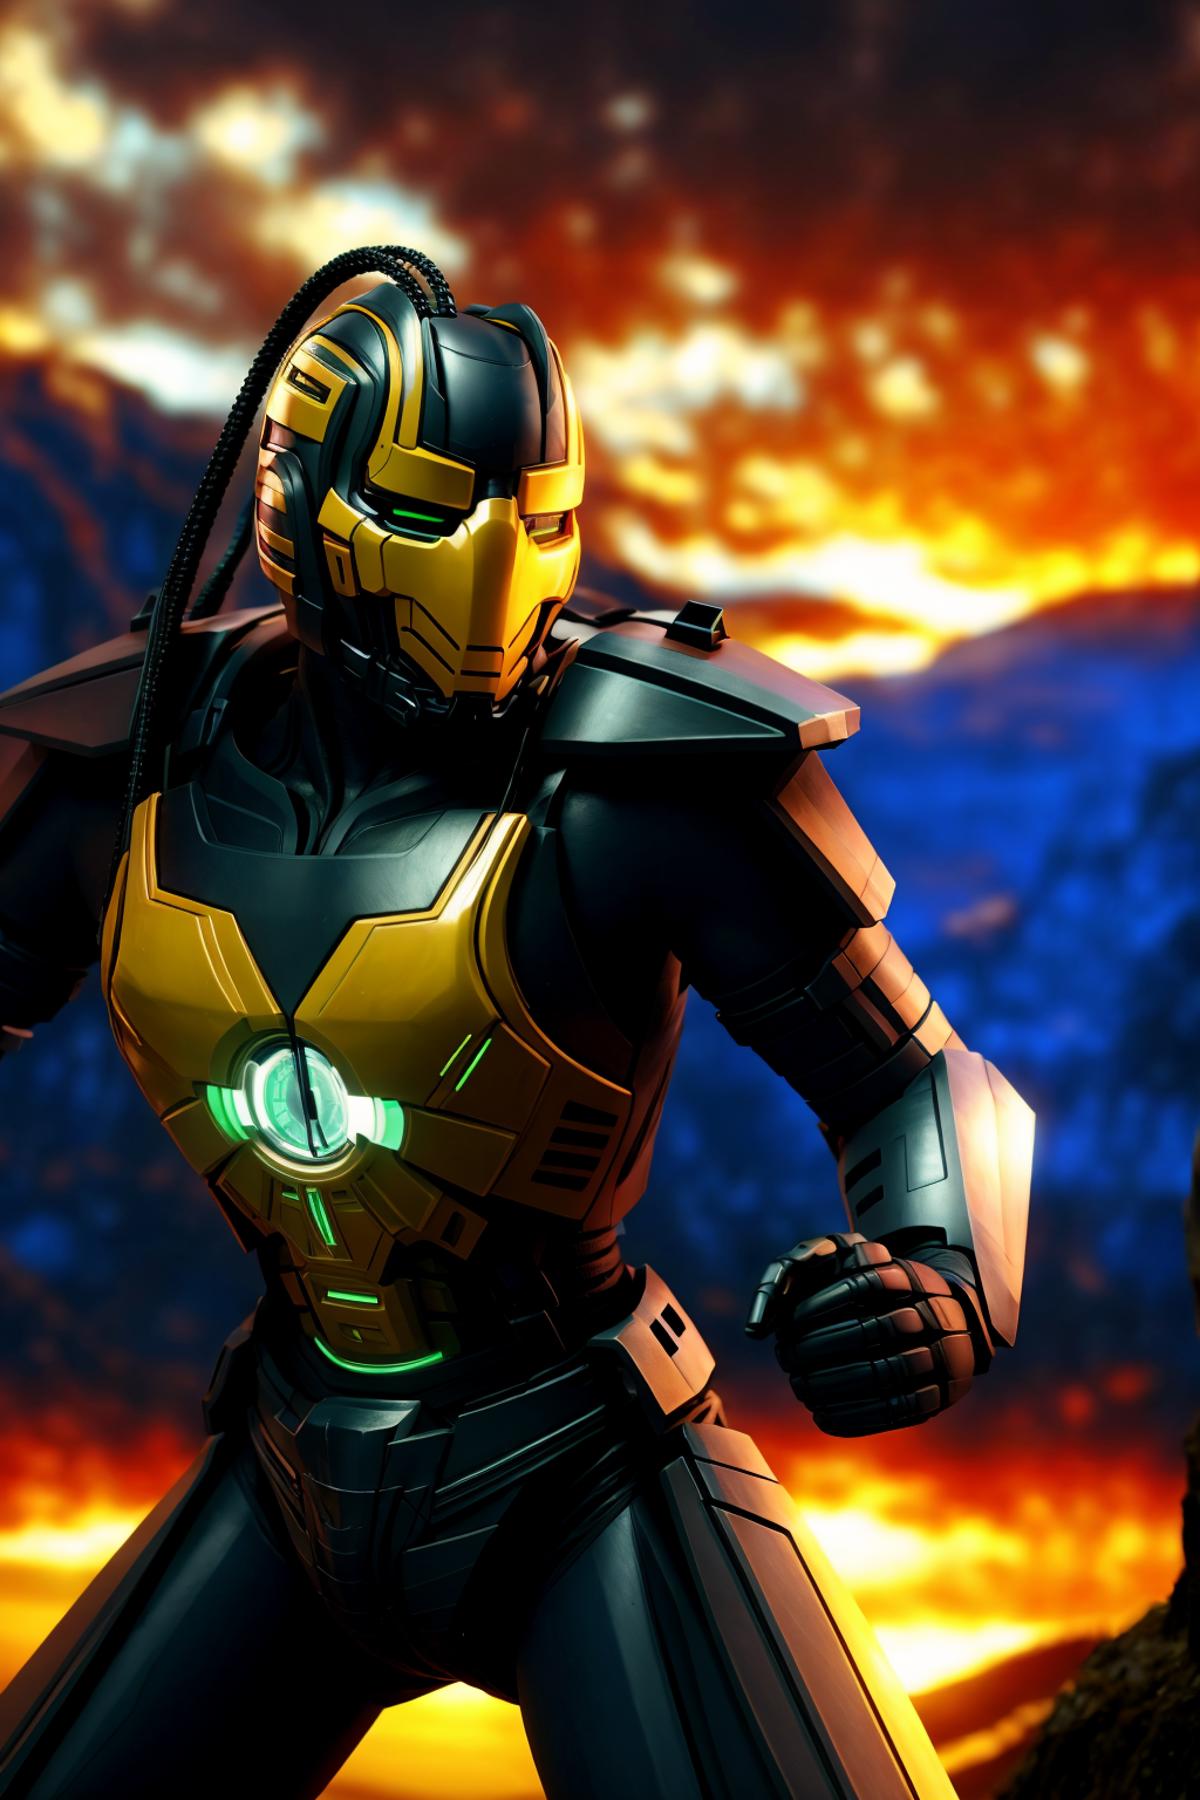 Cyrax (Mortal Kombat) image by DeViLDoNia